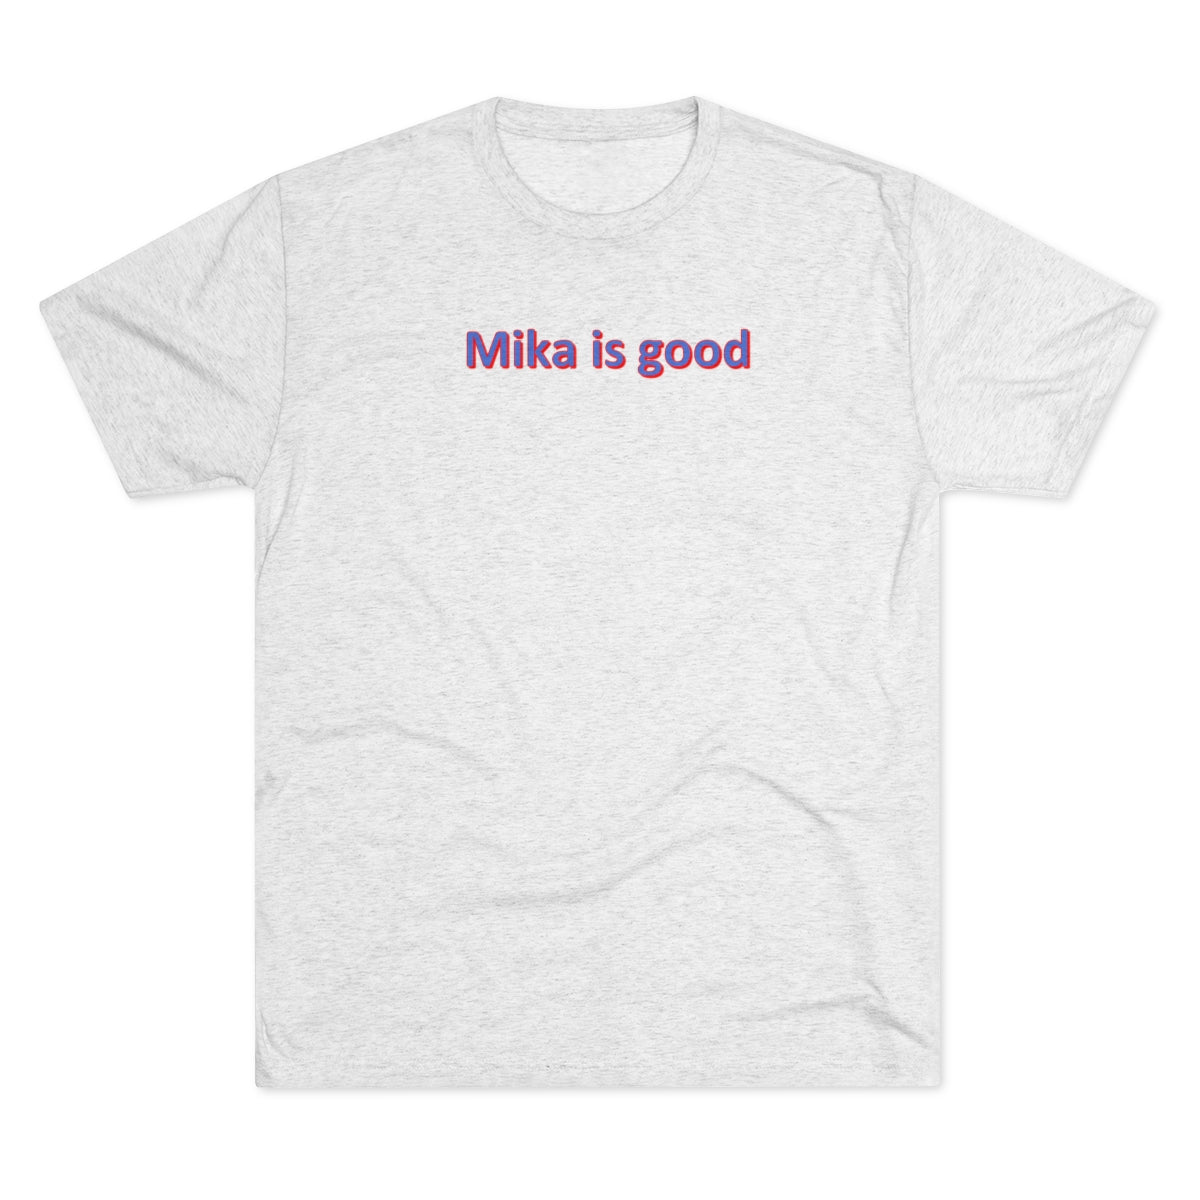 Mika is good Shirt - IsGoodBrand